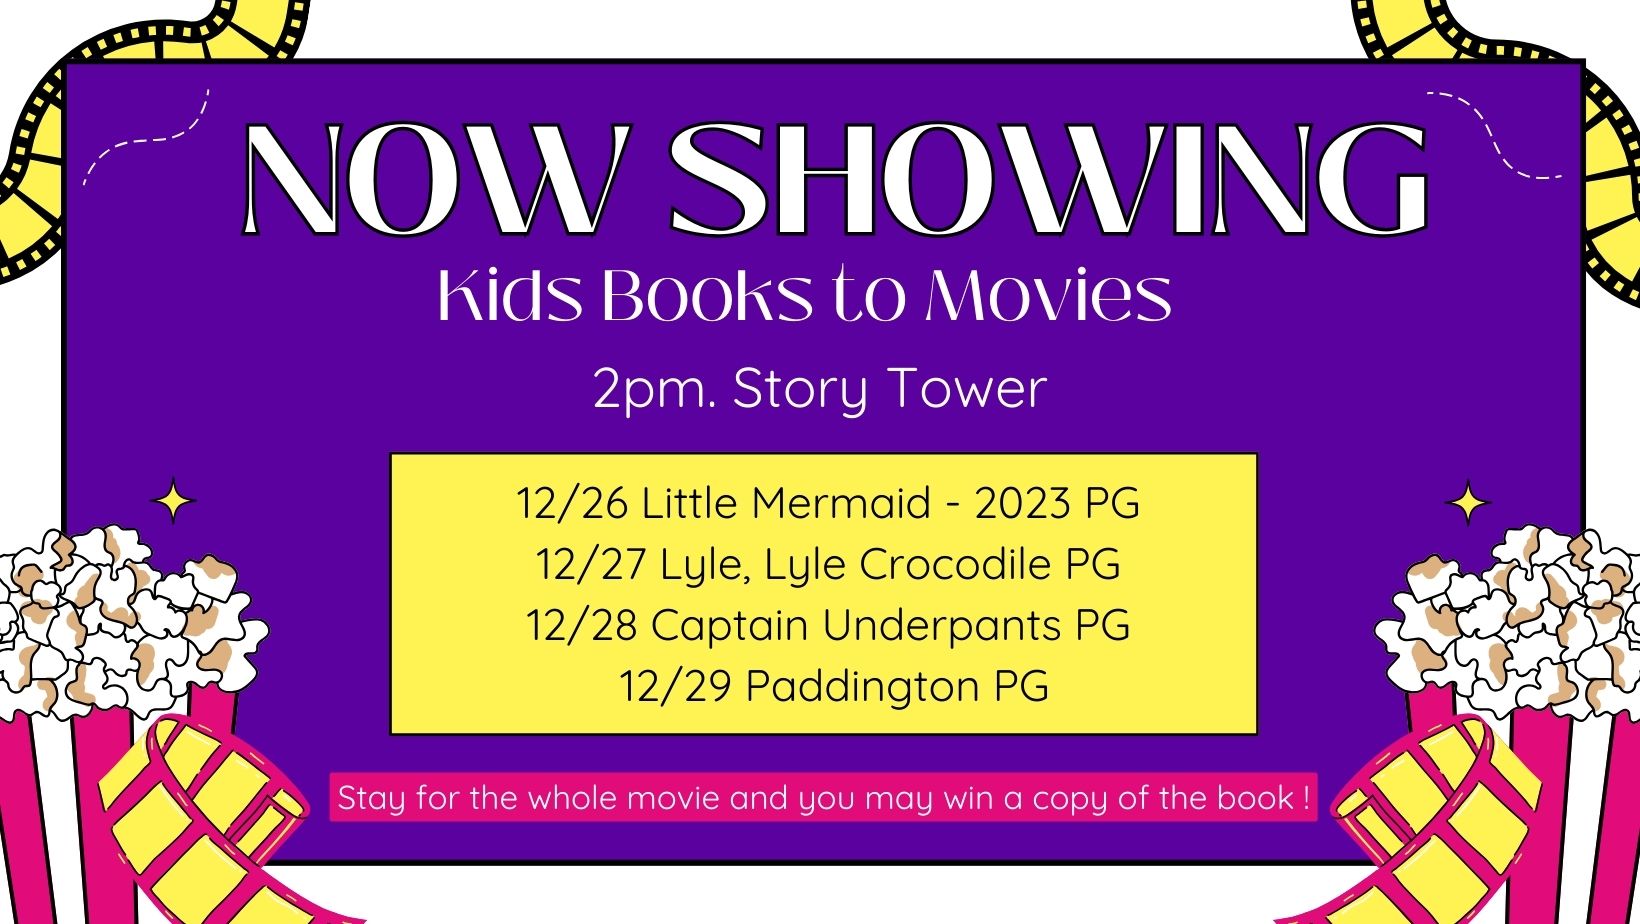 movie screen advertising the kids books to movies program